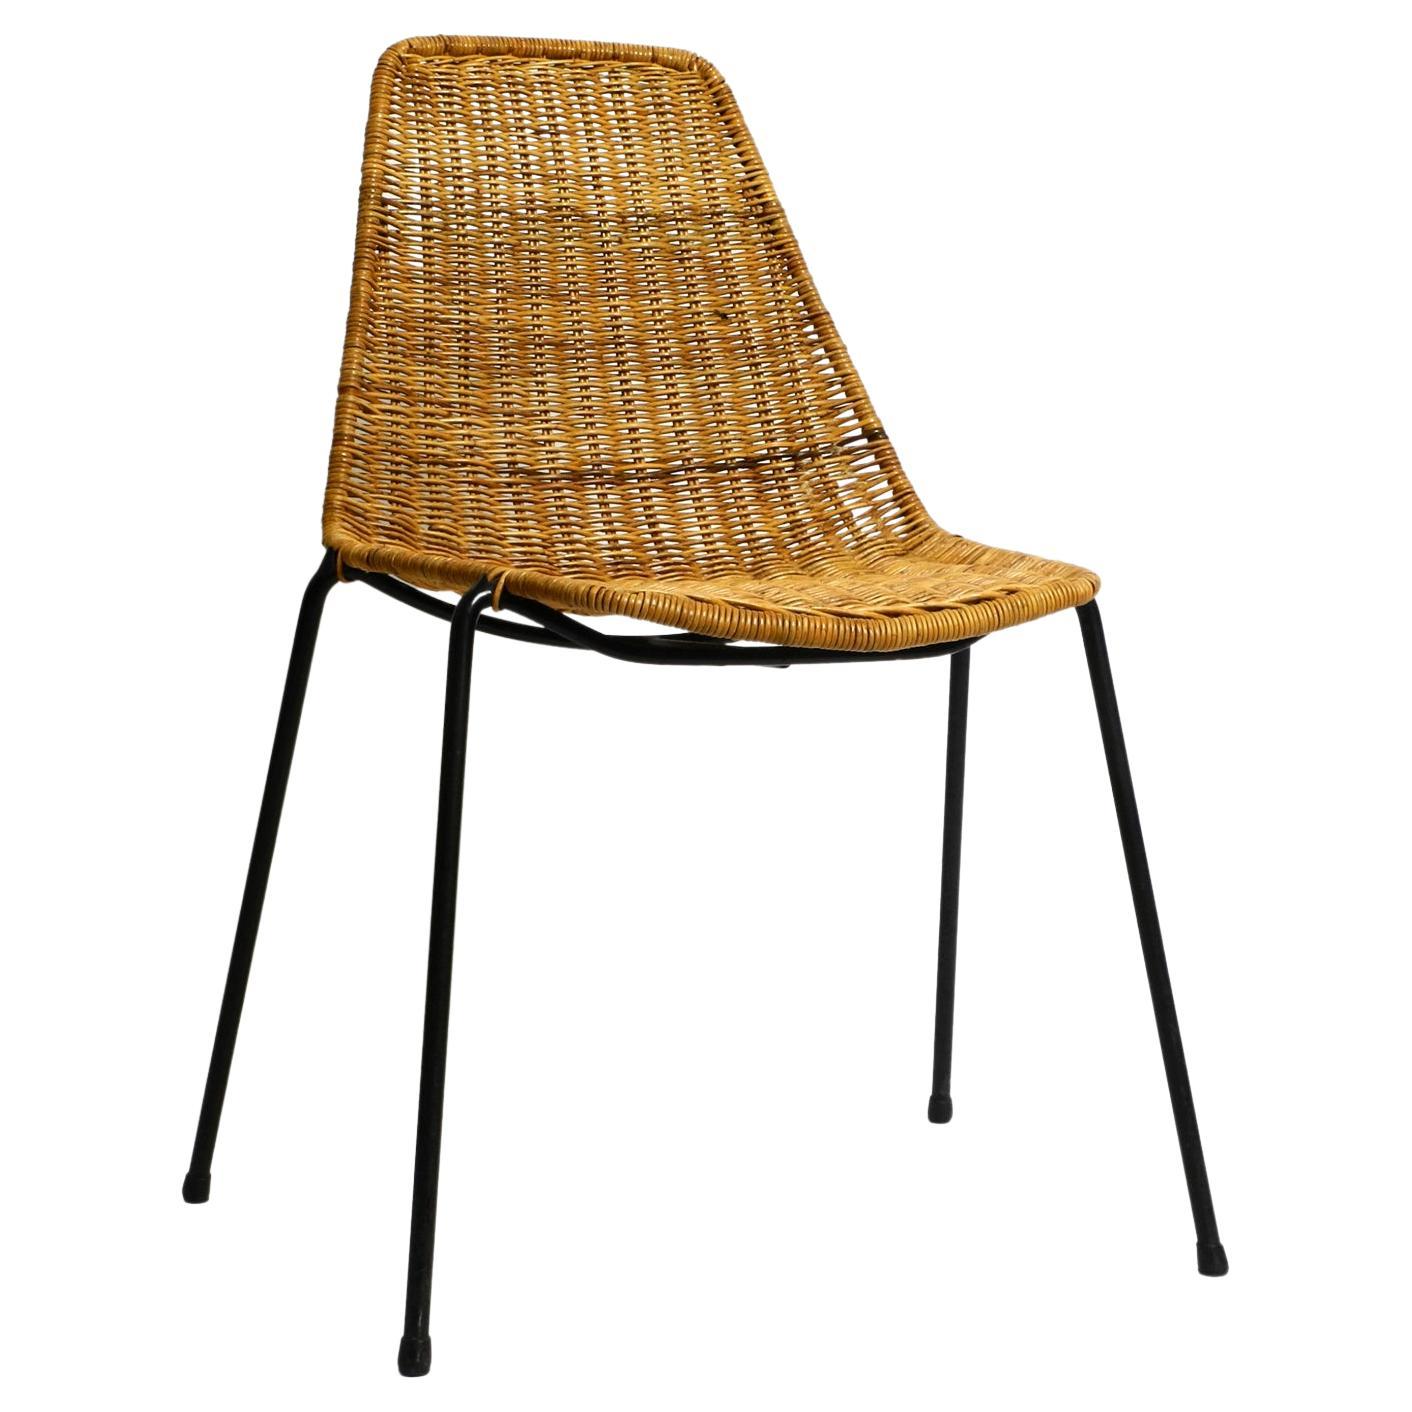 Original Italian Mid-Century Modern Gian Franco Legler Basket Chair For Sale